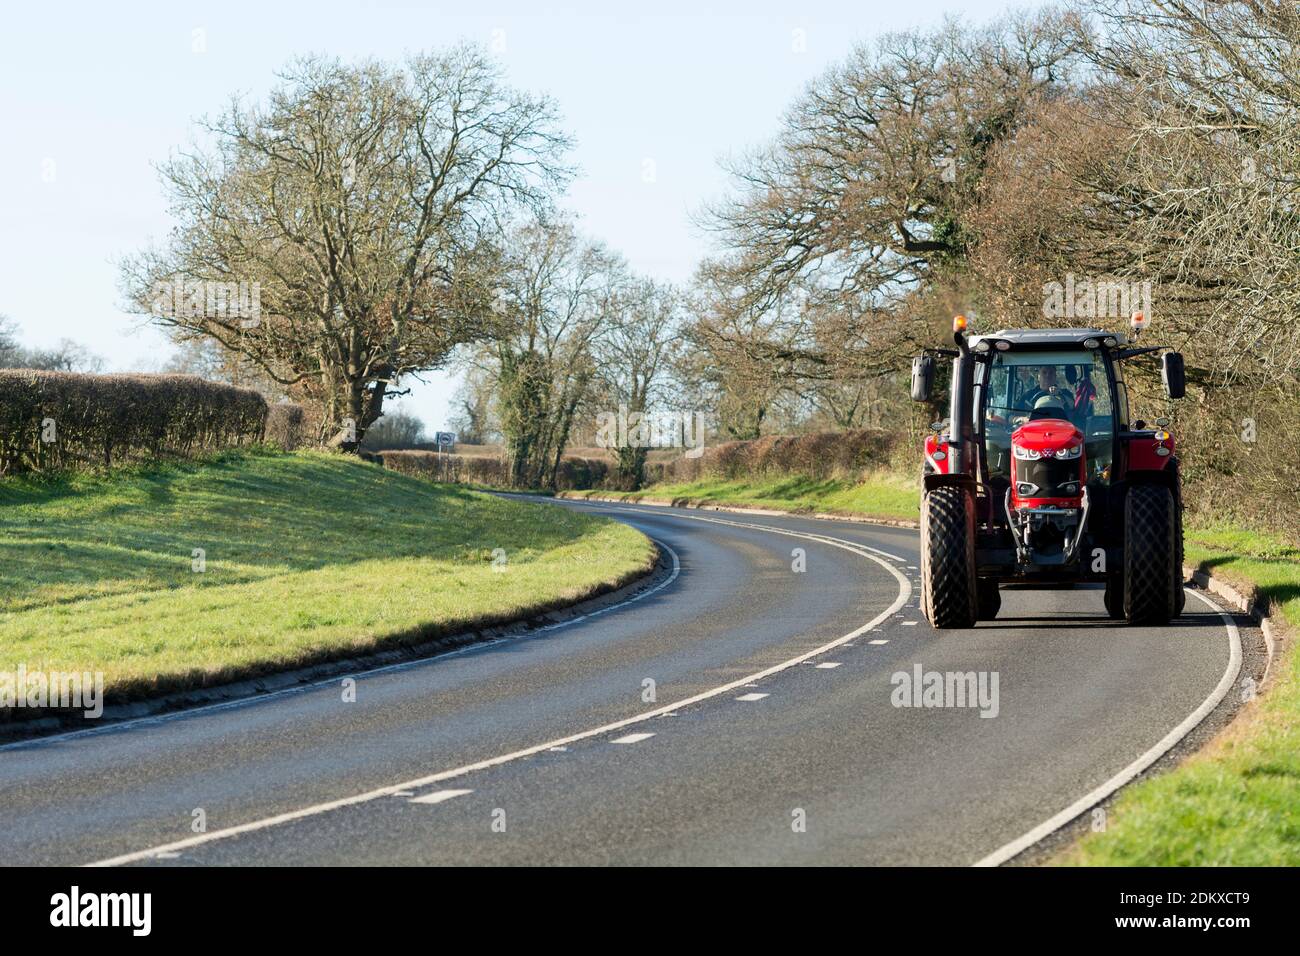 A Massey Ferguson tractor on a country road (A4189) near Warwick, Warwickshire, England, UK Stock Photo